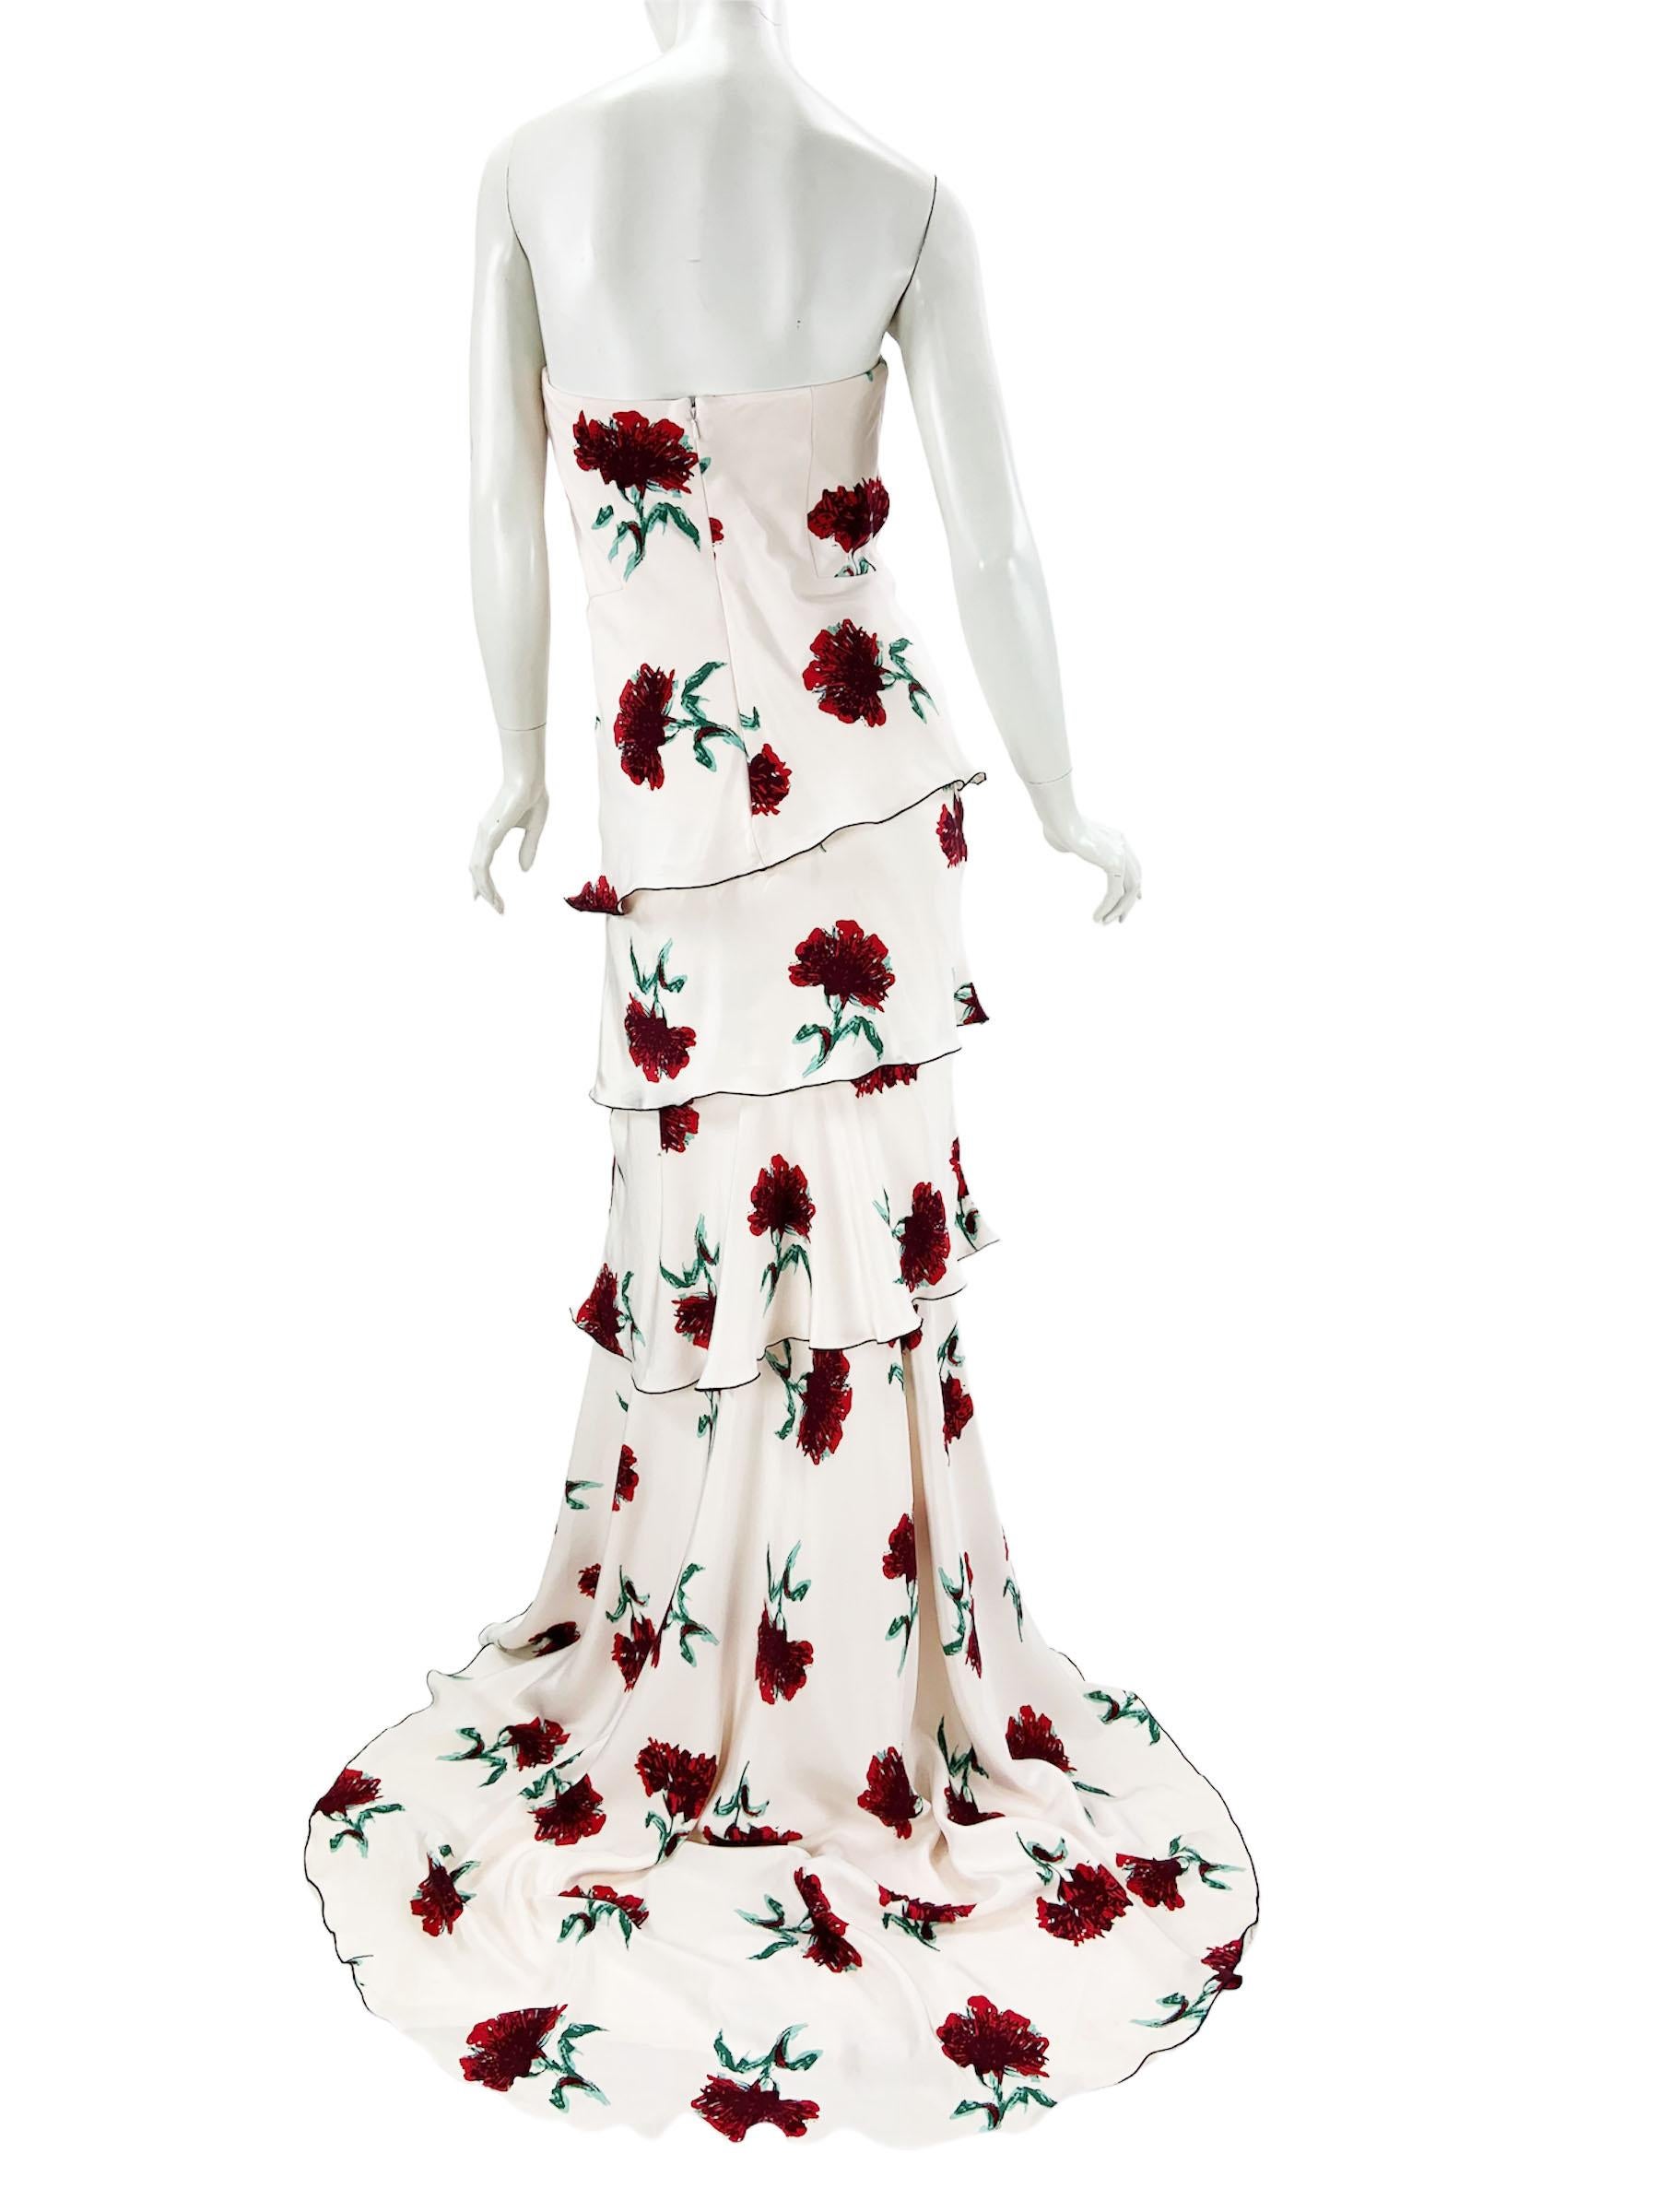 Women's Oscar de la Renta Runway Silk White Floral Print Layered Corset Dress Gown US 6 For Sale